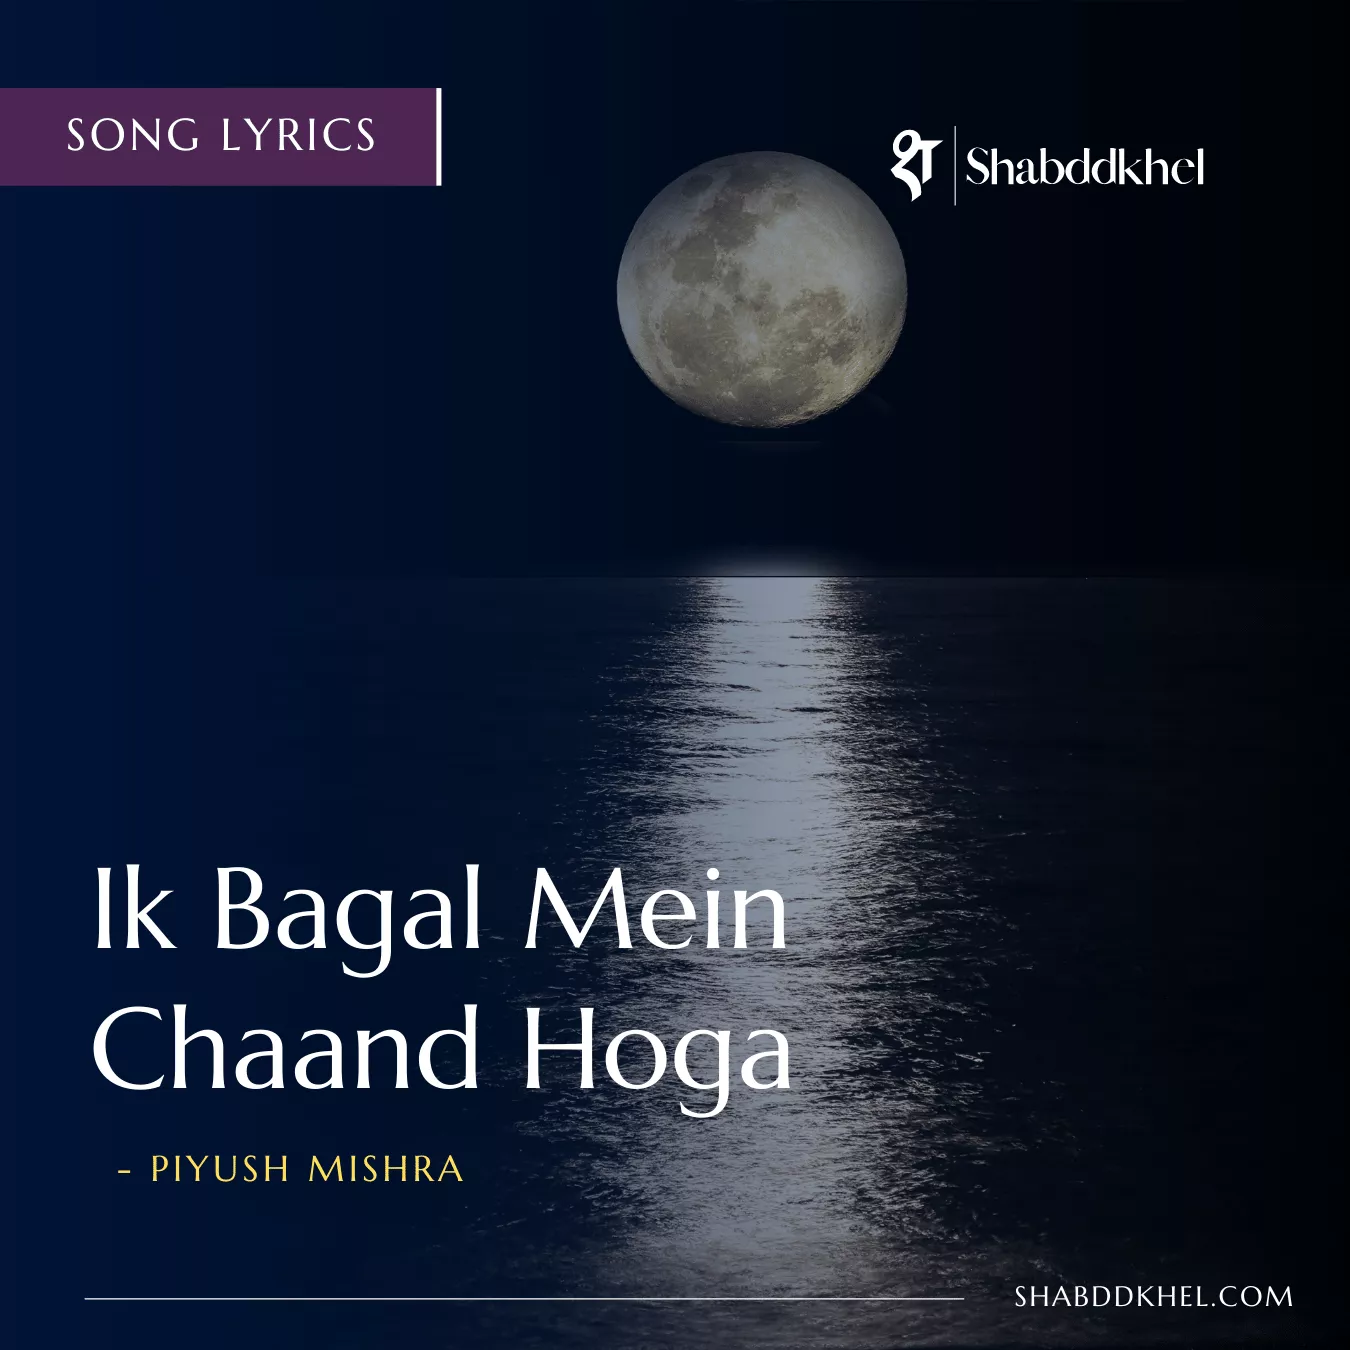 Ik Bagal Mein Chaand Hoga Lyrics - Piyush Mishra LyricsIk Bagal Mein Chaand Hoga - Piyush Mishra Lyrics